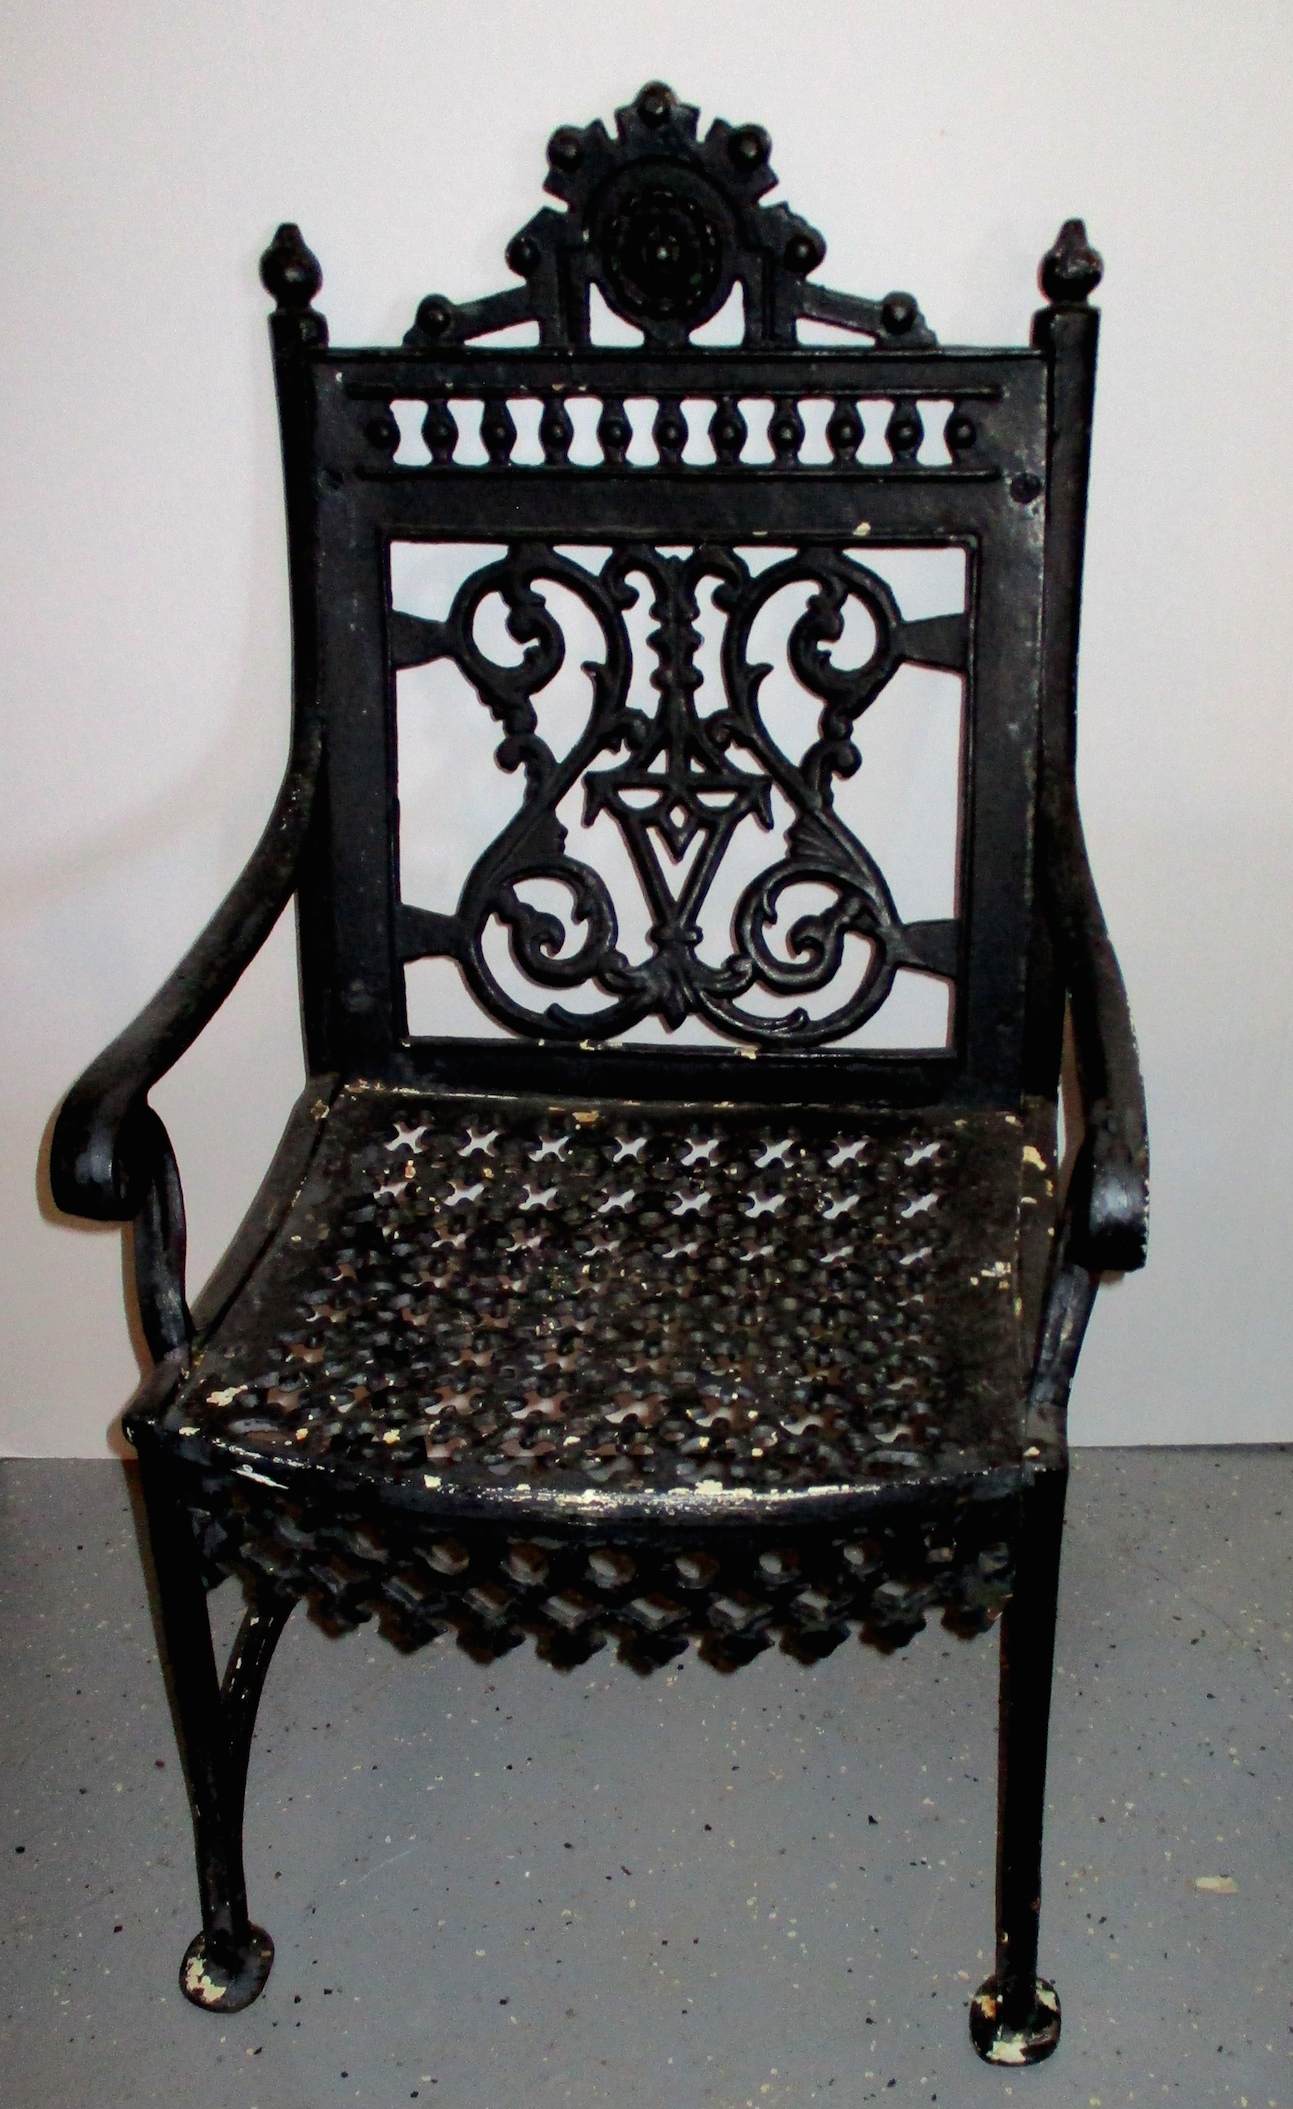 Ca. 1890 American Aesthetic Cast Iron Chair